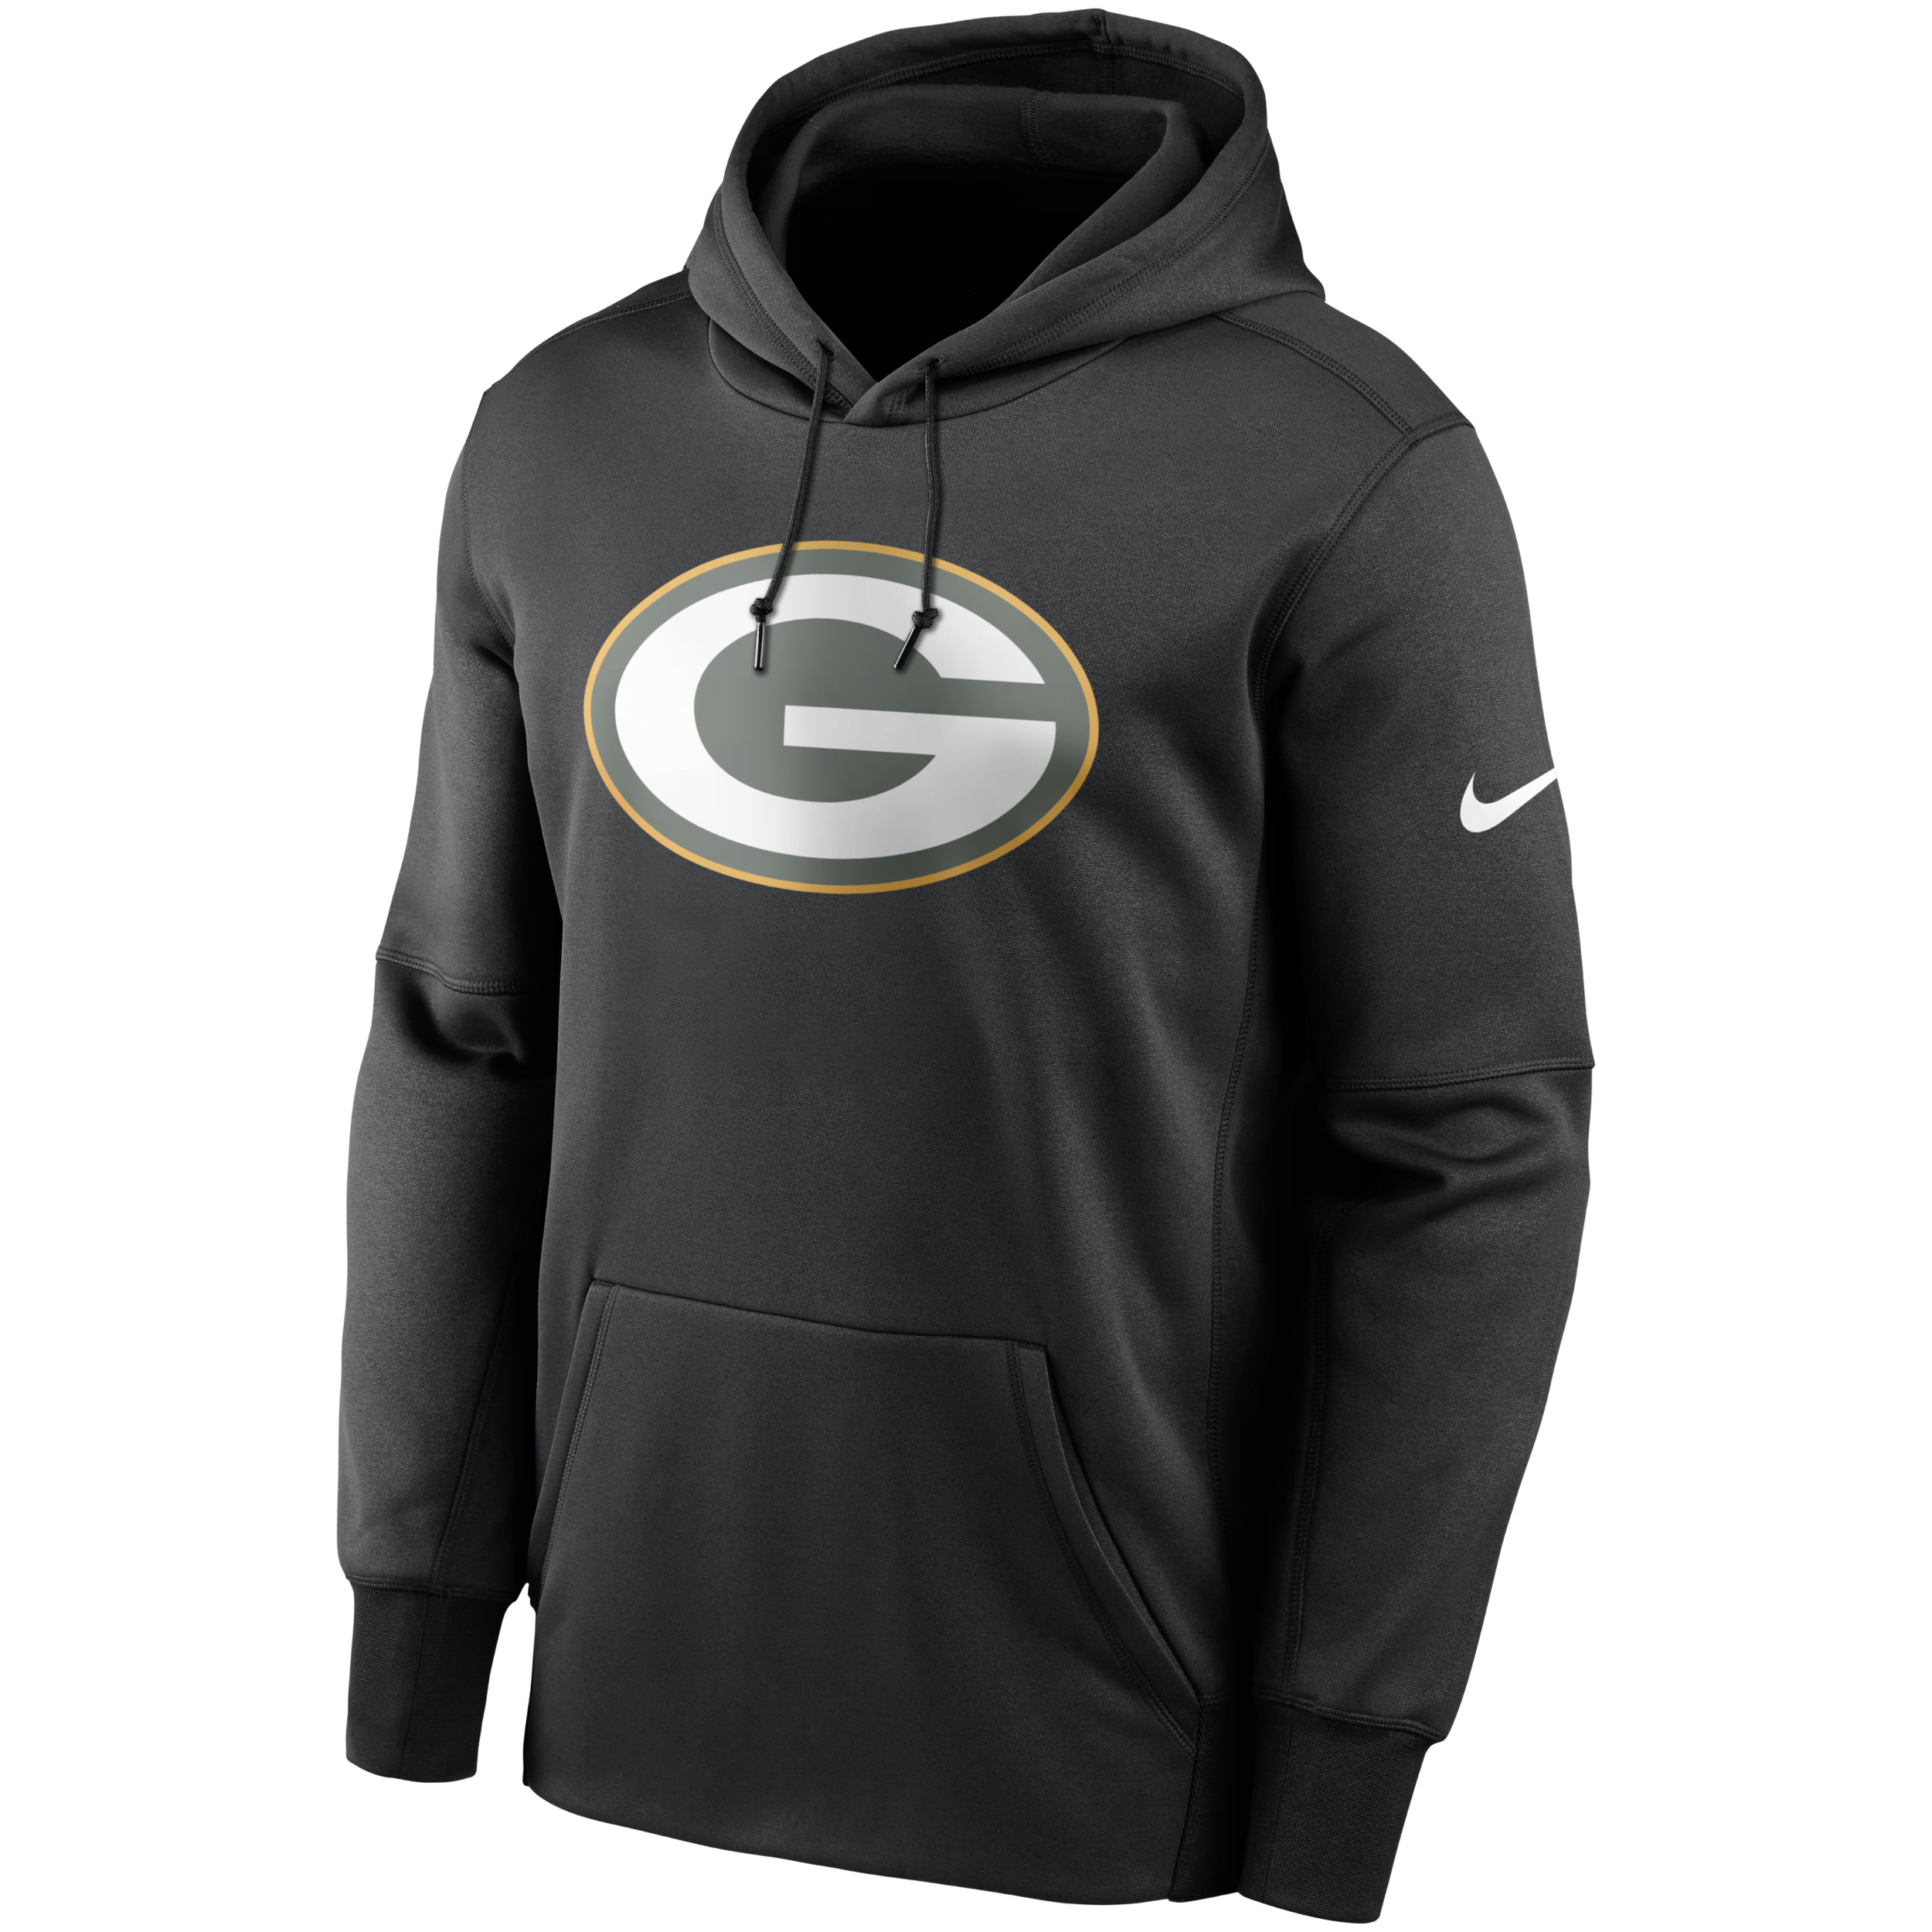 Felpa pullover con cappuccio Nike Therma Prime Logo (NFL Green Bay Packers) - Uomo - Verde